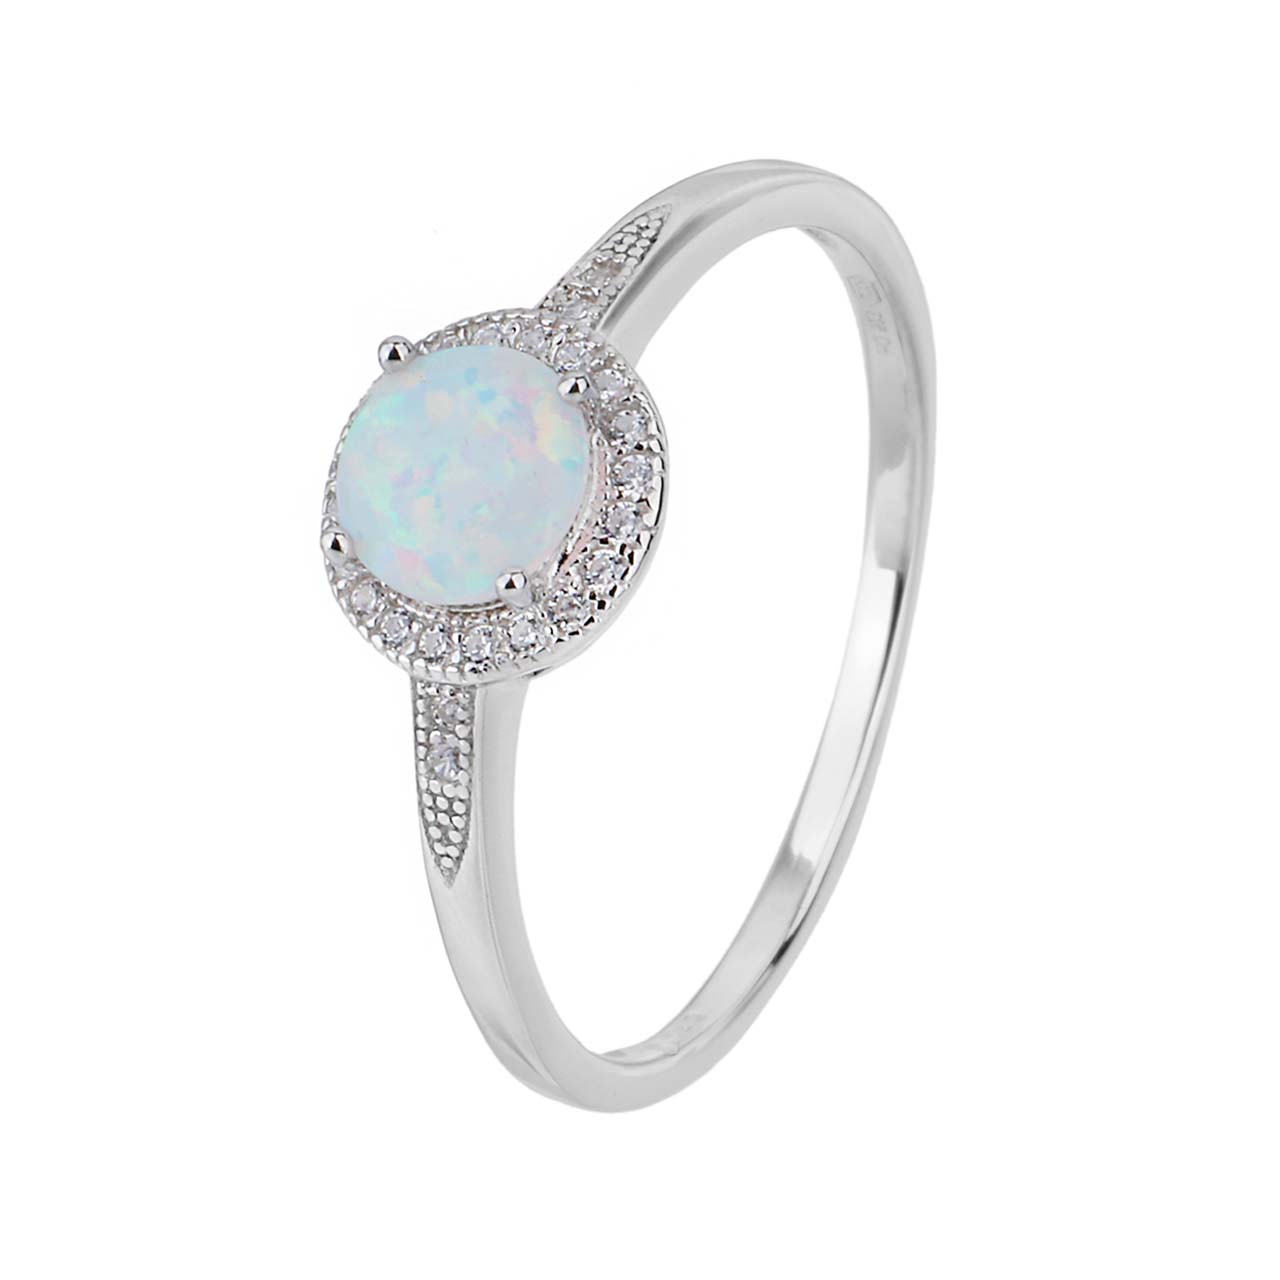 Stříbrný prsten SOLITÉR bílý OPÁL Velikost prstenu: 59 Ag 925/1000